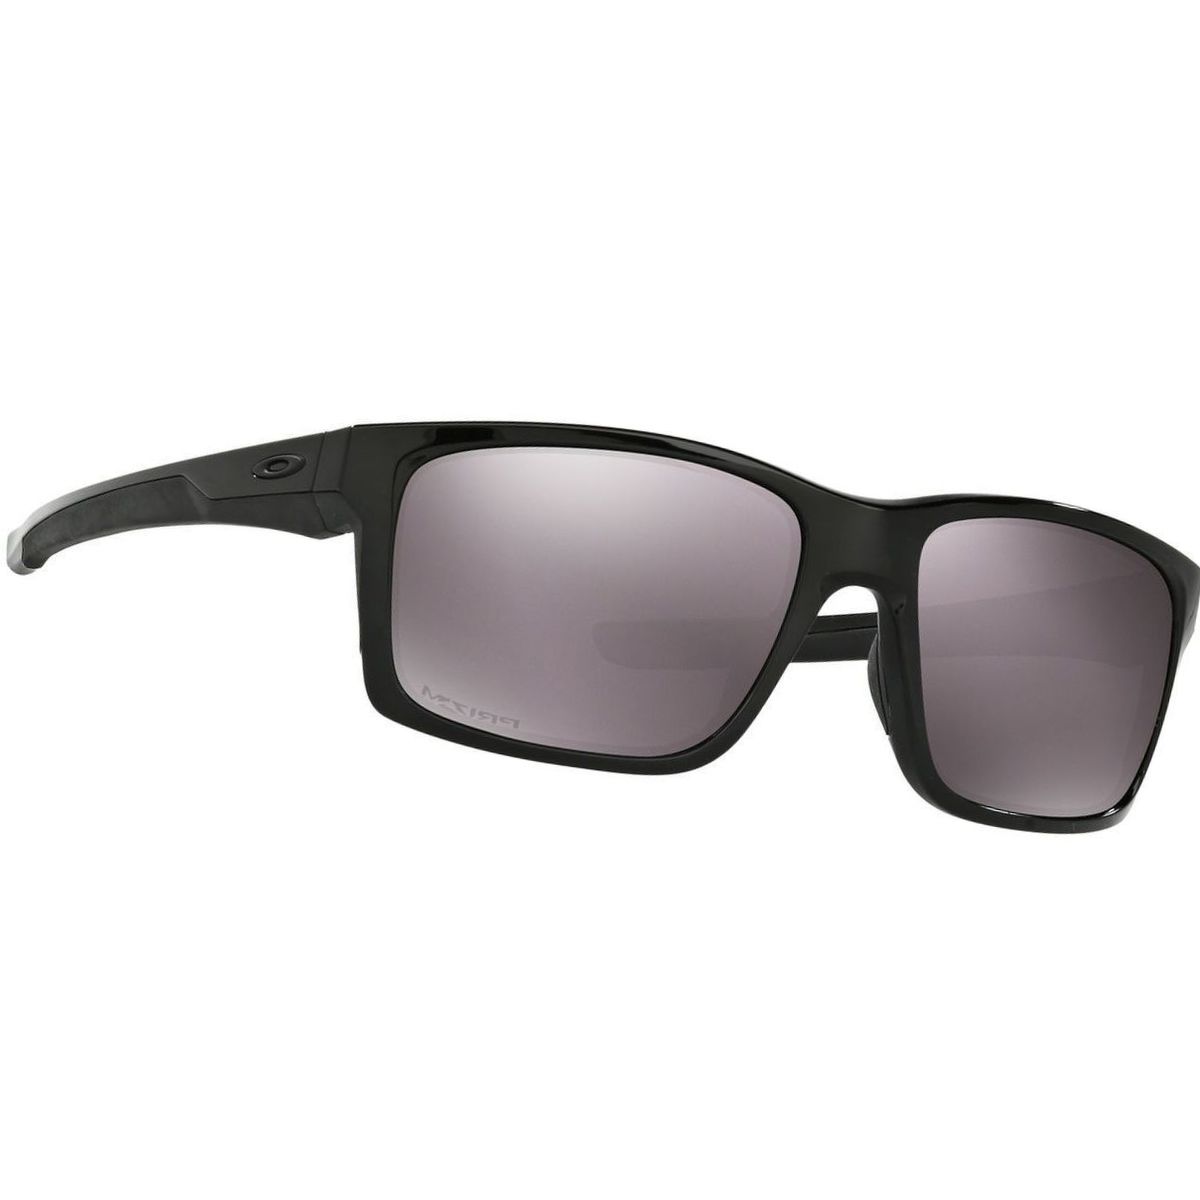 Oakley Straightlink Prizm Polarized Sunglasses - Men's